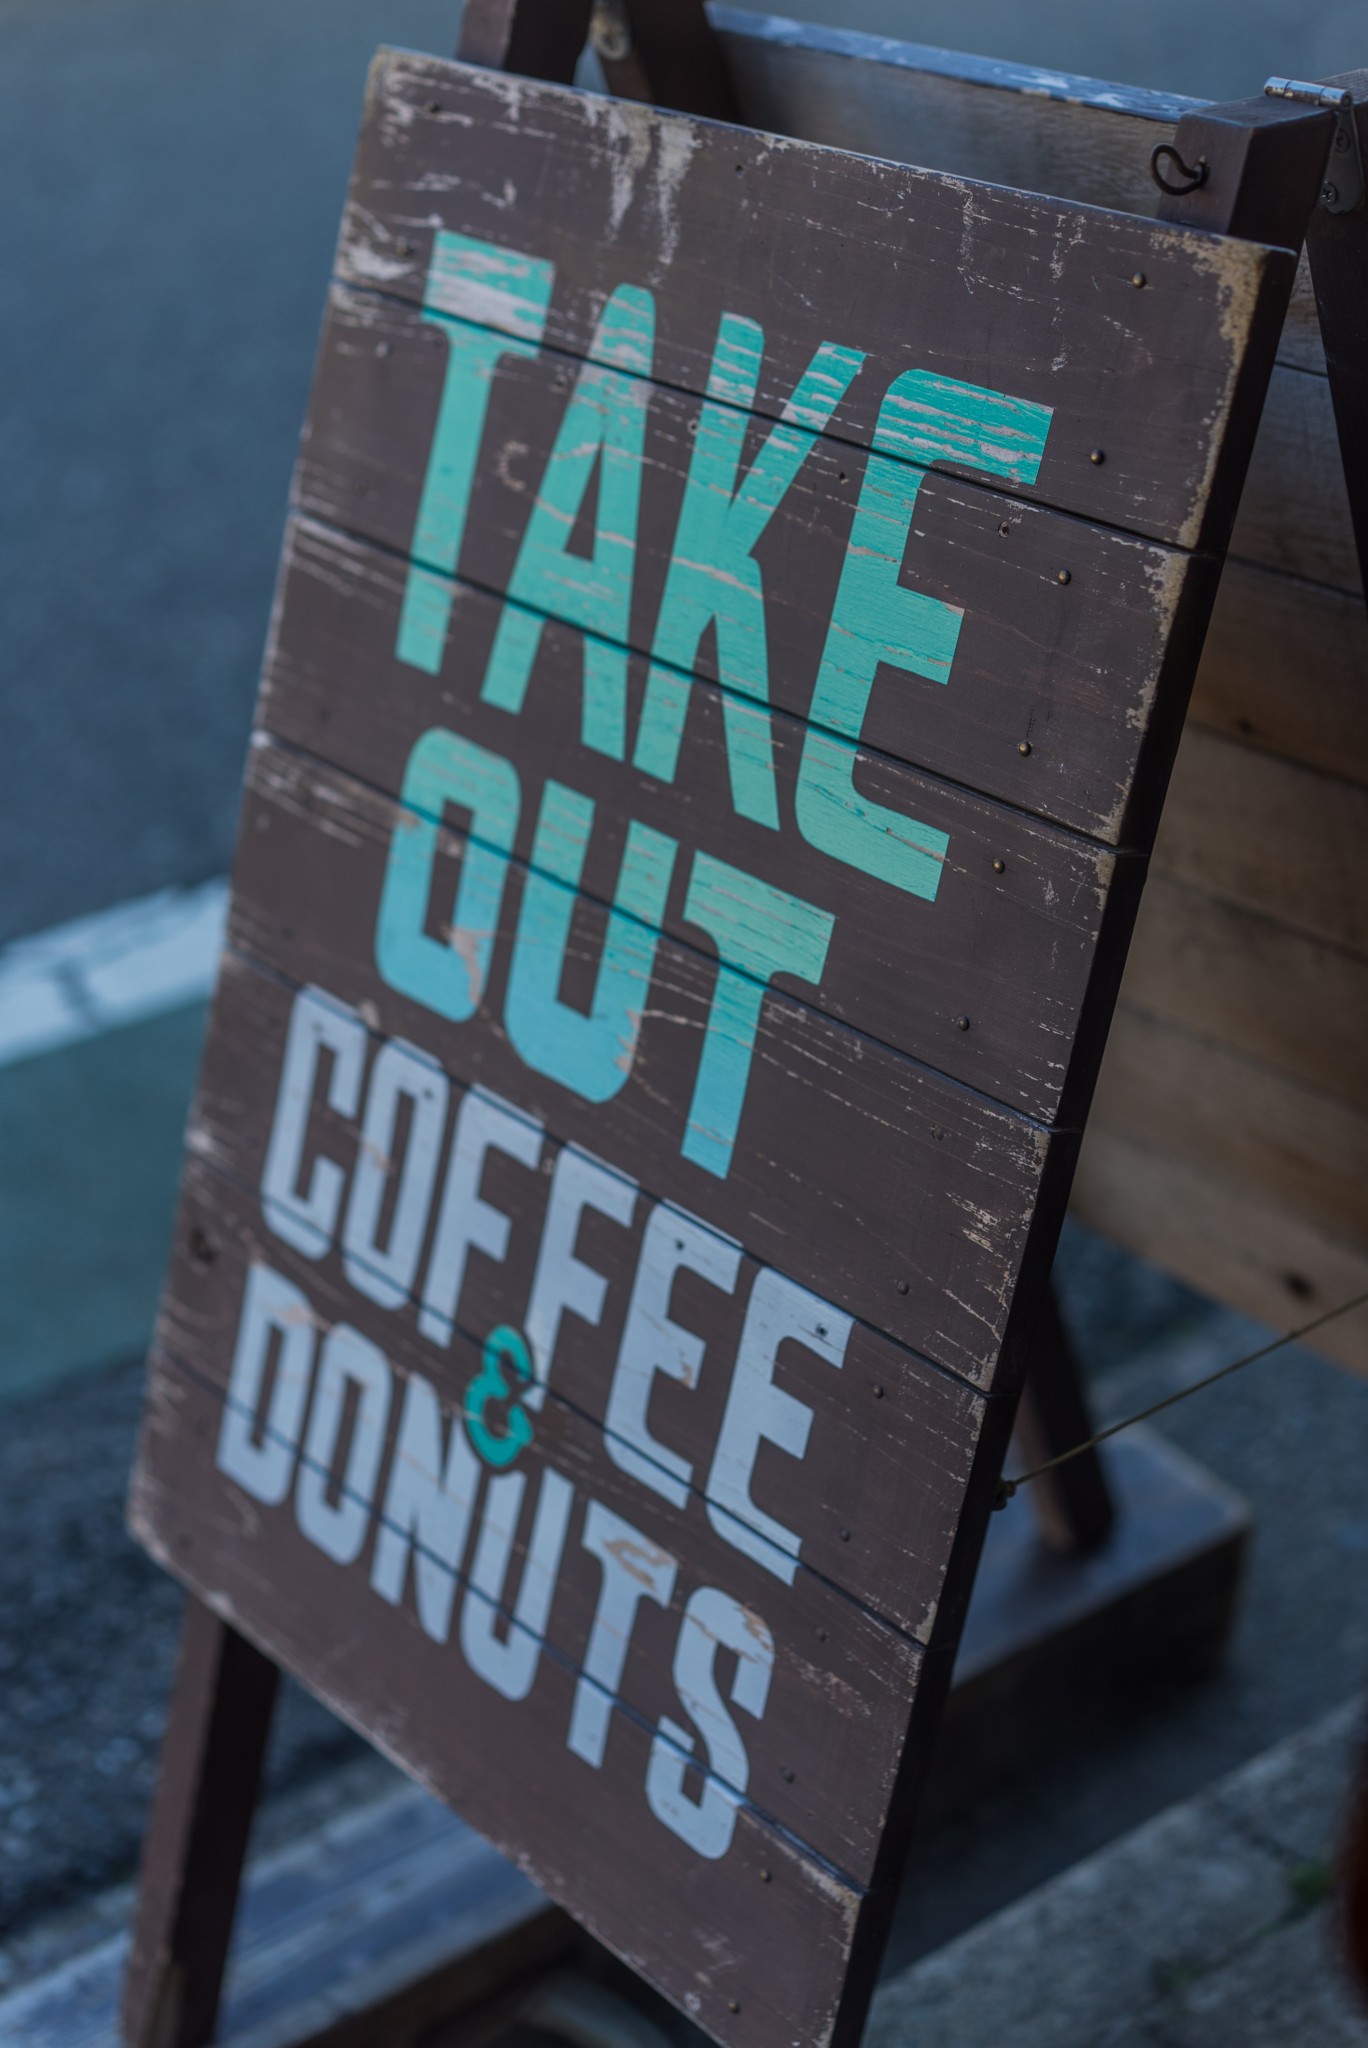 Donuts and coffee from Halenova, Kamakura